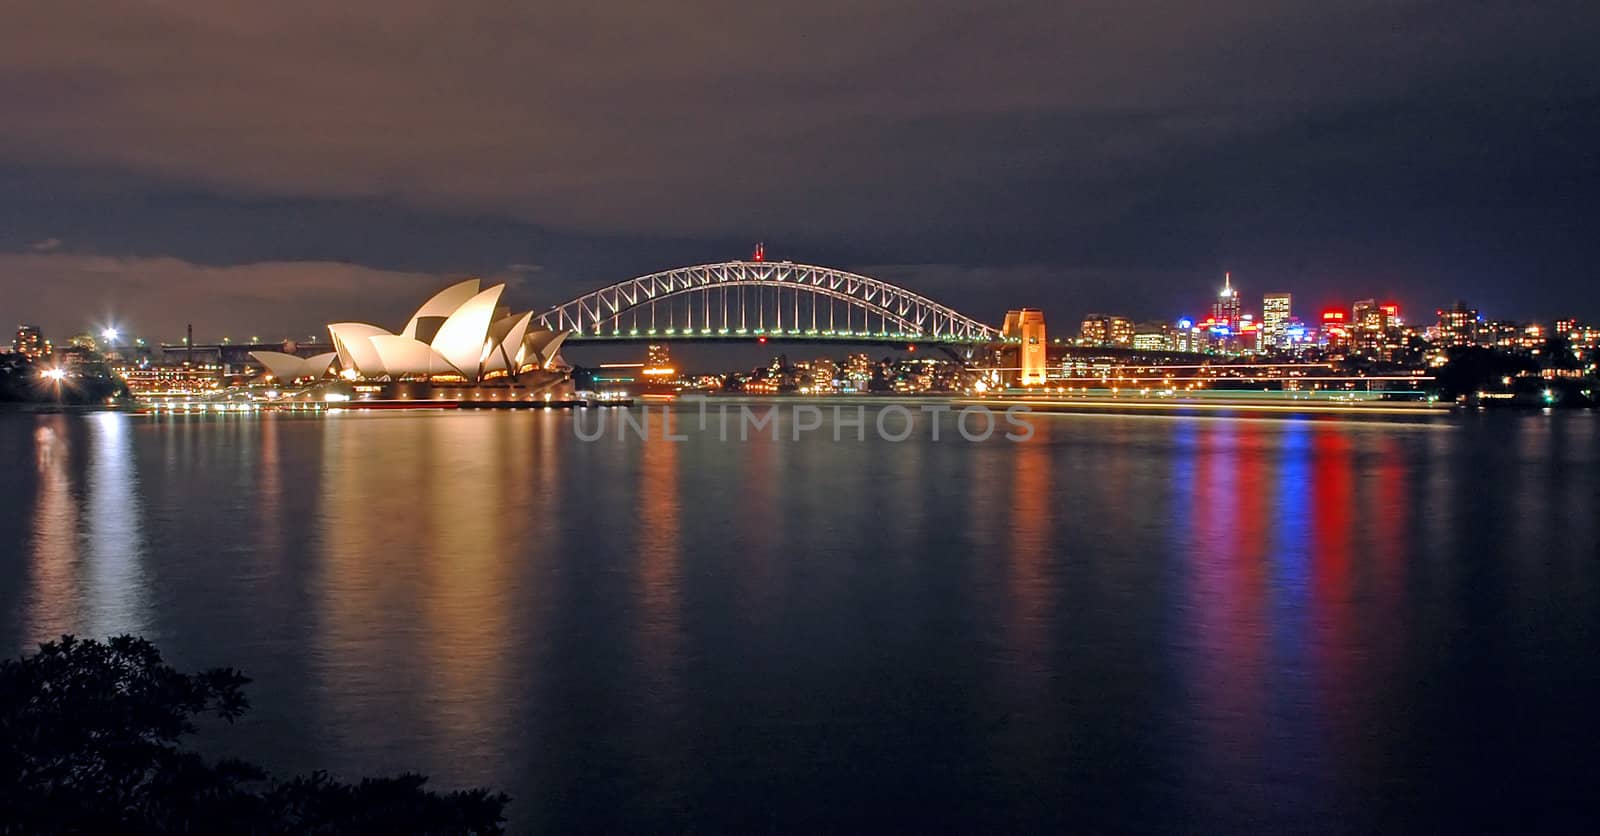 opera house, harbour bridge and north sydney at night; photo taken from royal botanic gardens